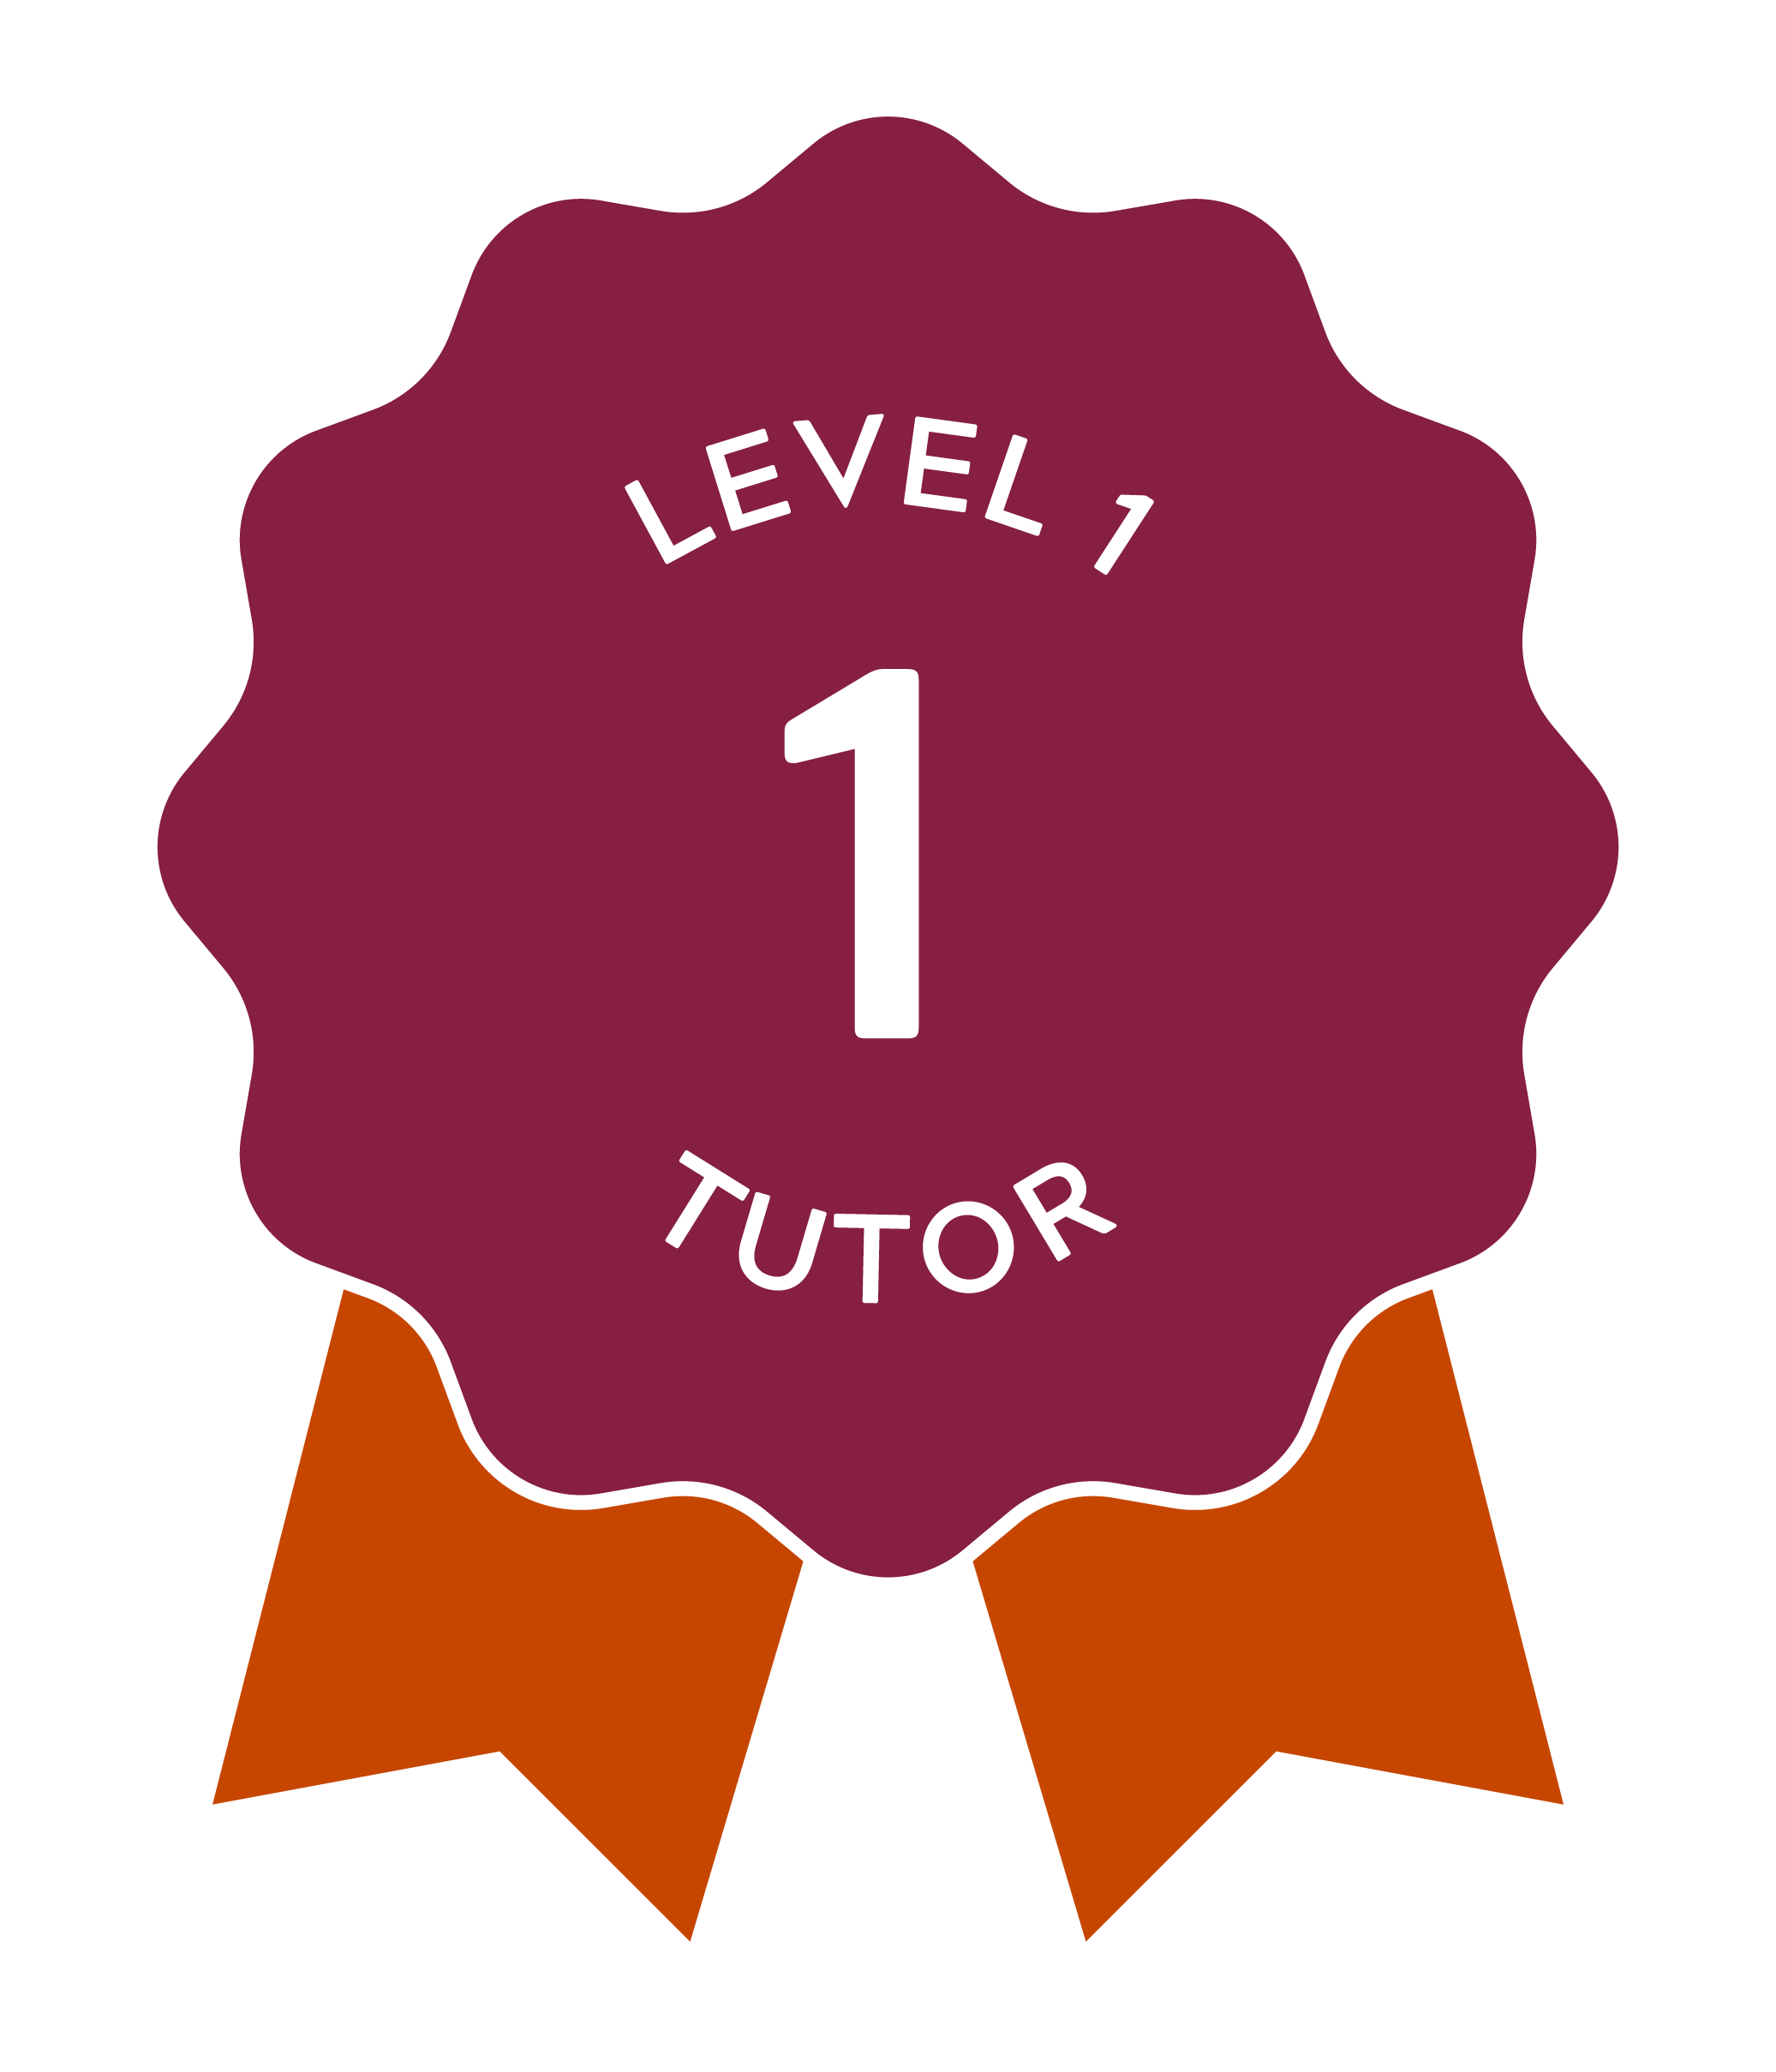 CRLA Level 1 Certified Tutor